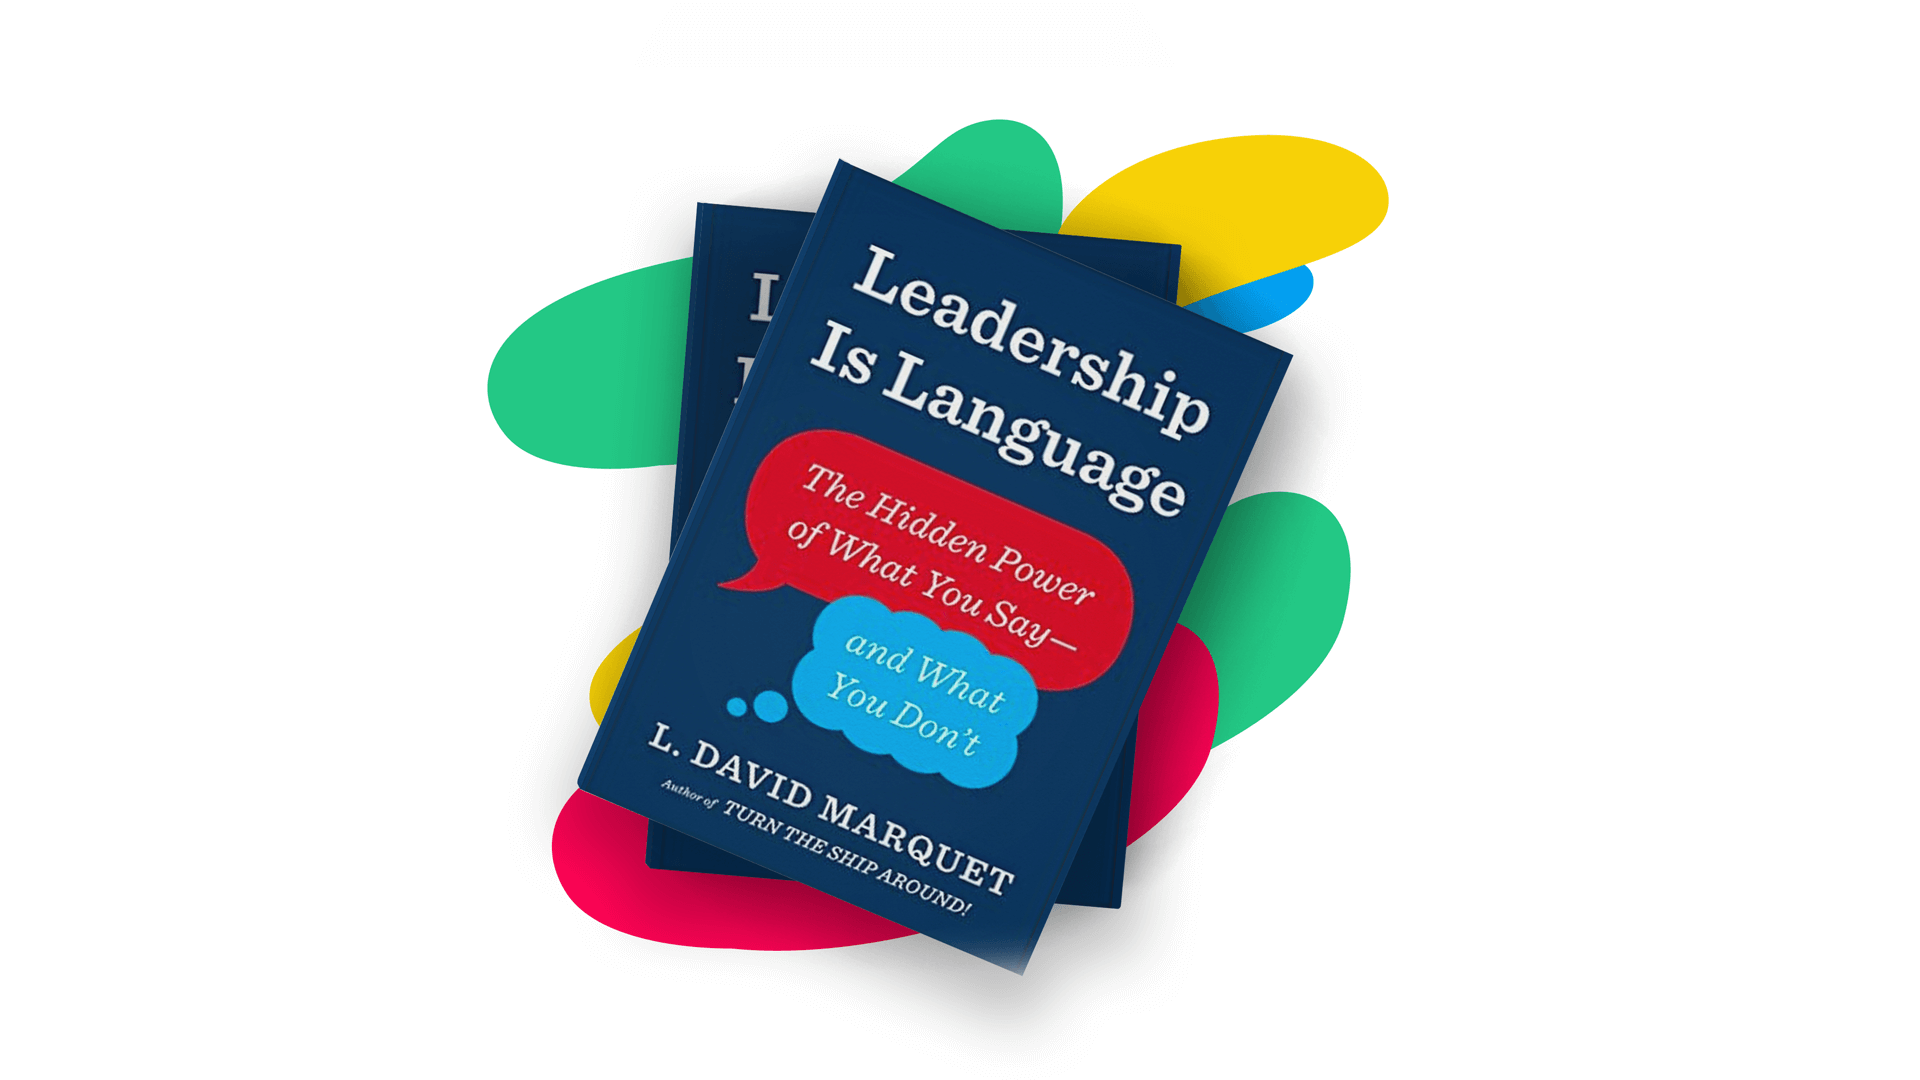 Best Project Management Books: Leadership is Language